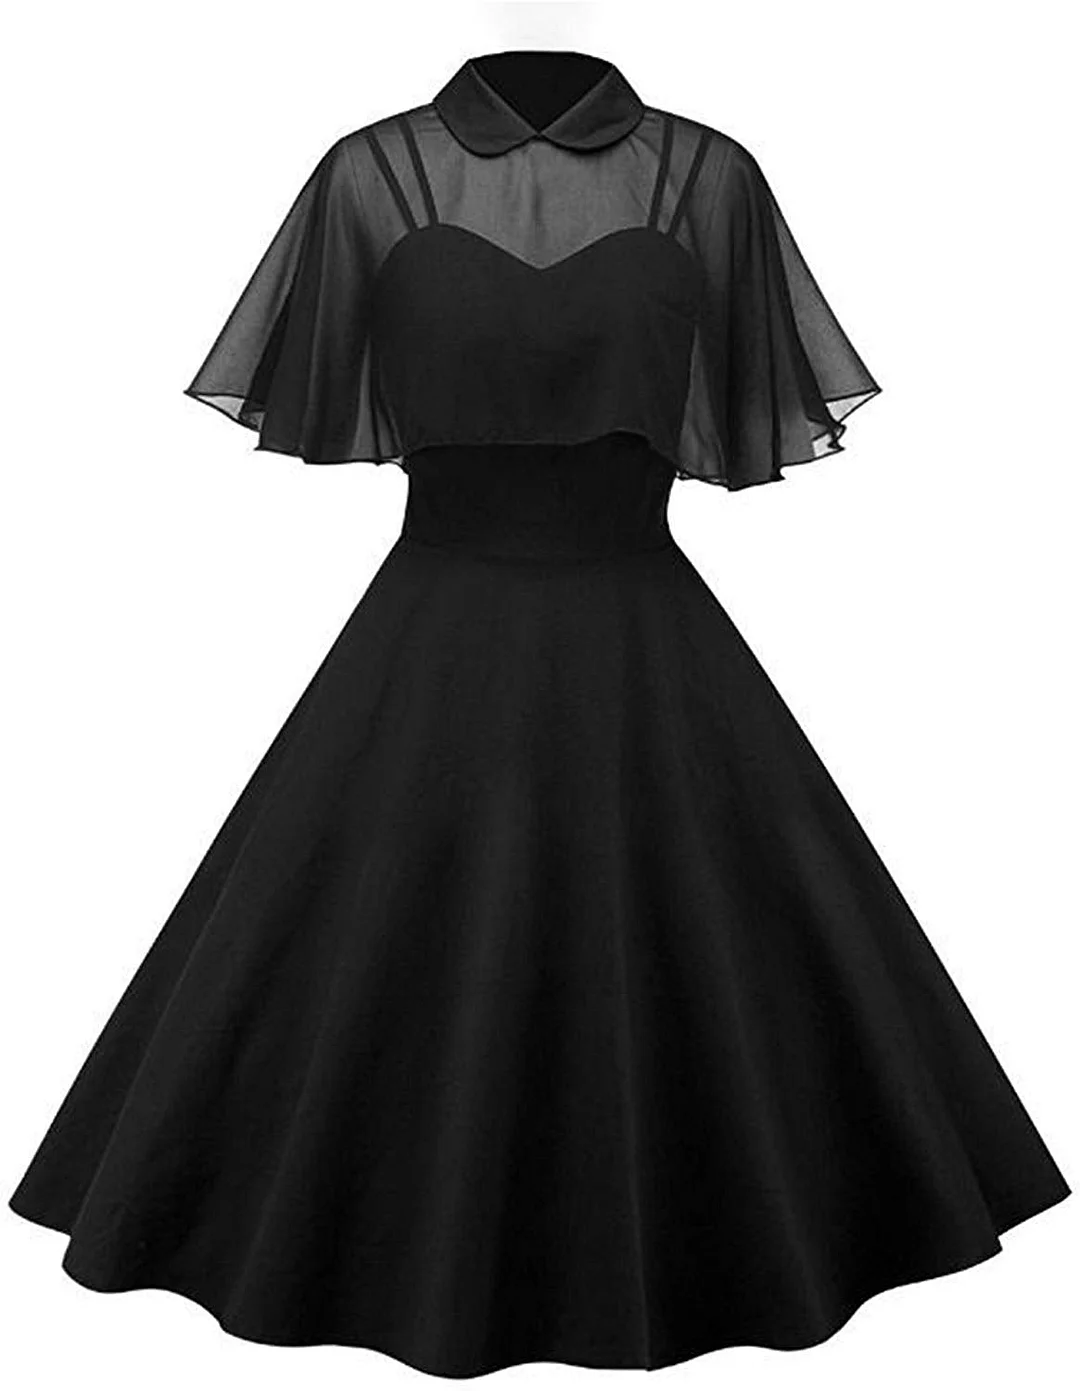 Women's 1950s Cloak Two-Piece Cocktail Dress